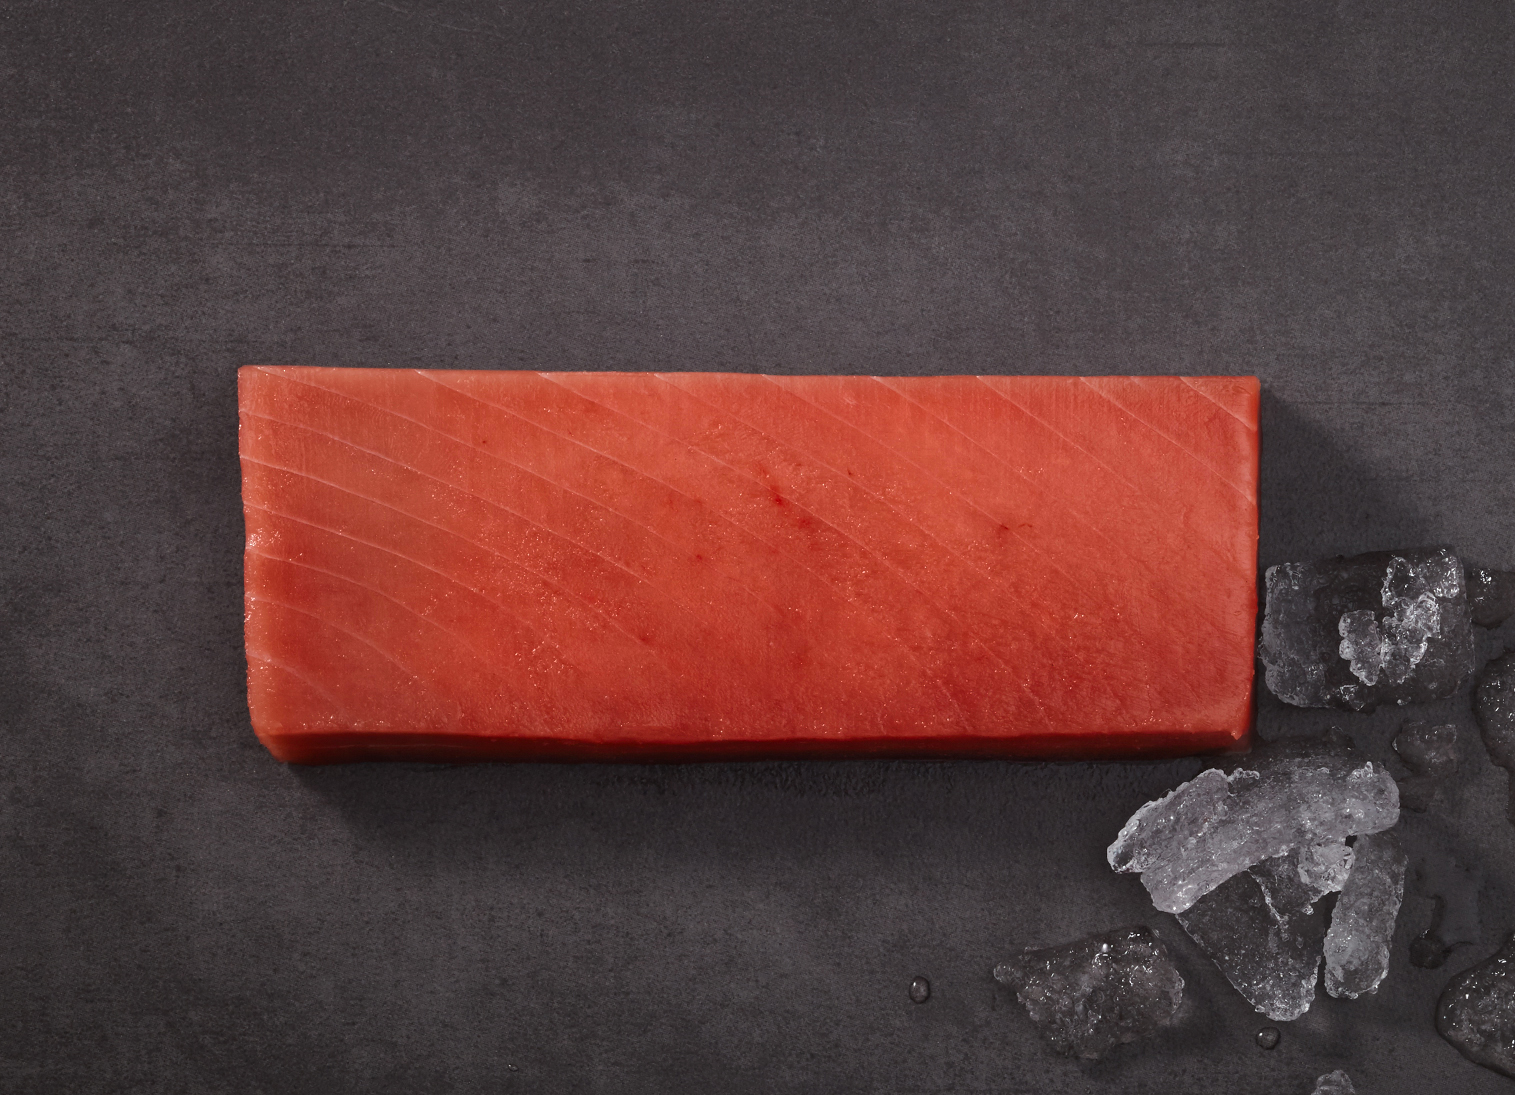 Thunfisch-Filet (Sashimi-Qualität) · Saku-Block